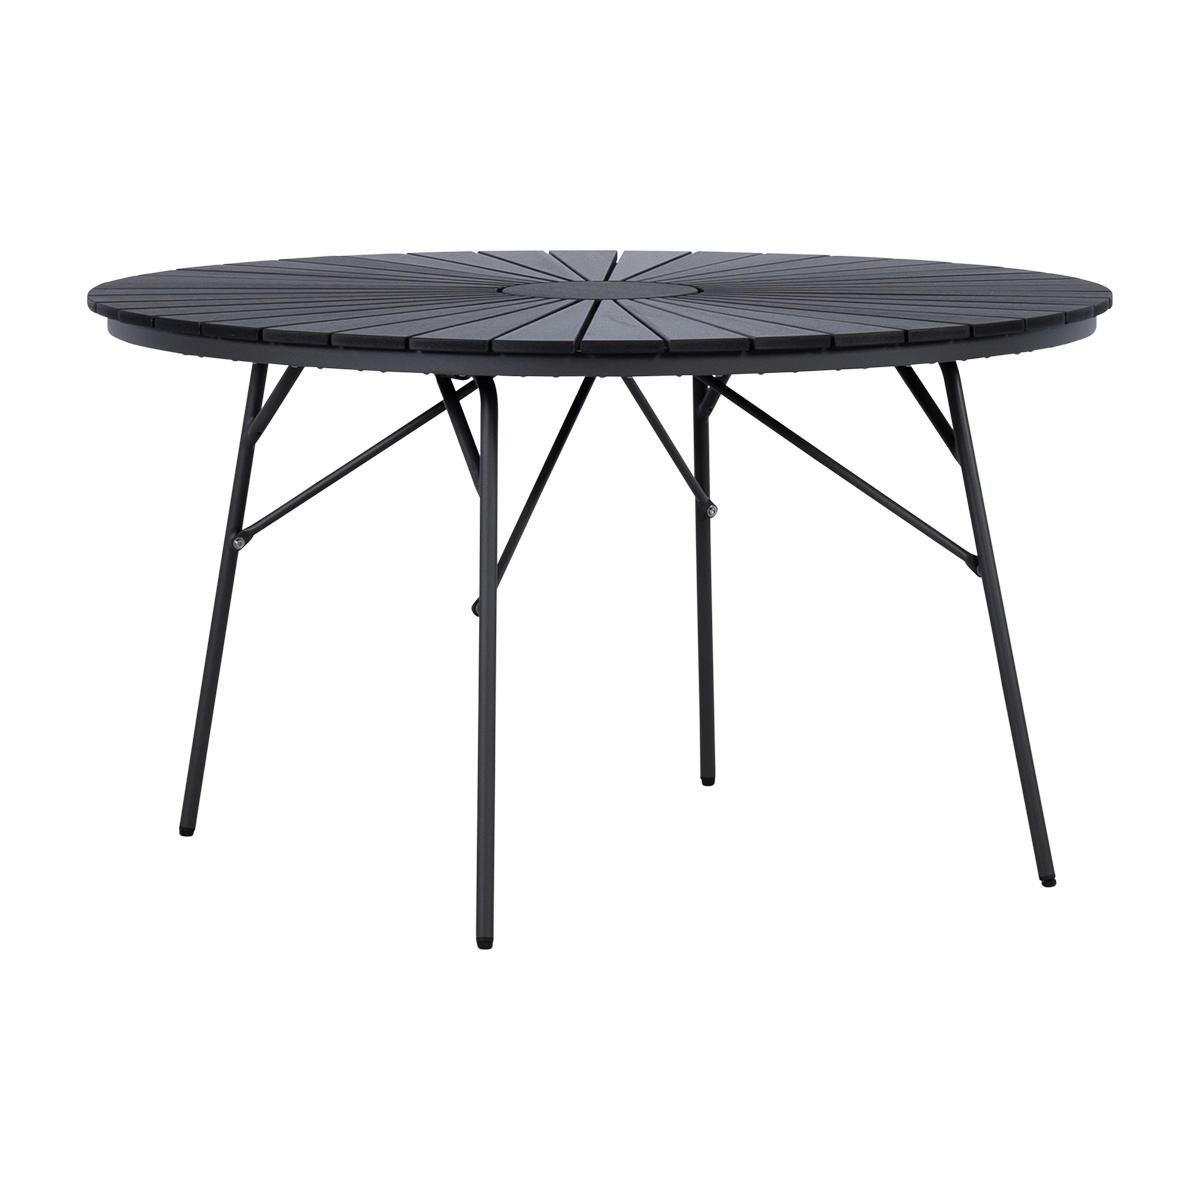 Cinas - Hard & Ellen Garden Table Ø 130 cm - Polywood - Anthracite/Black (2516020)